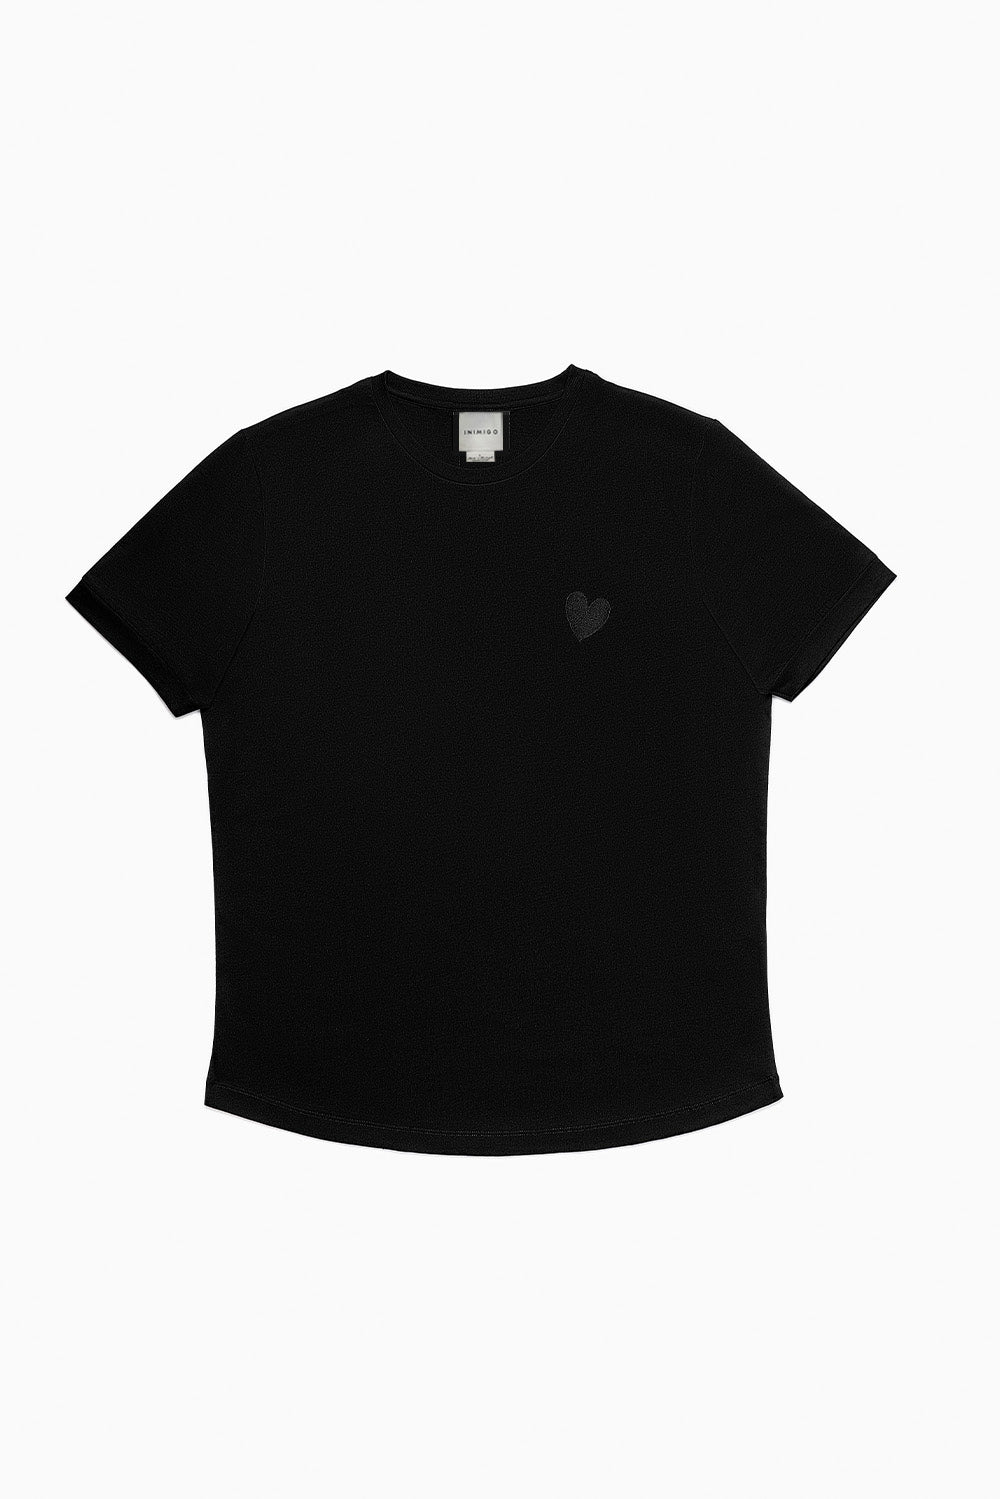 Heart Sustainable T-shirt